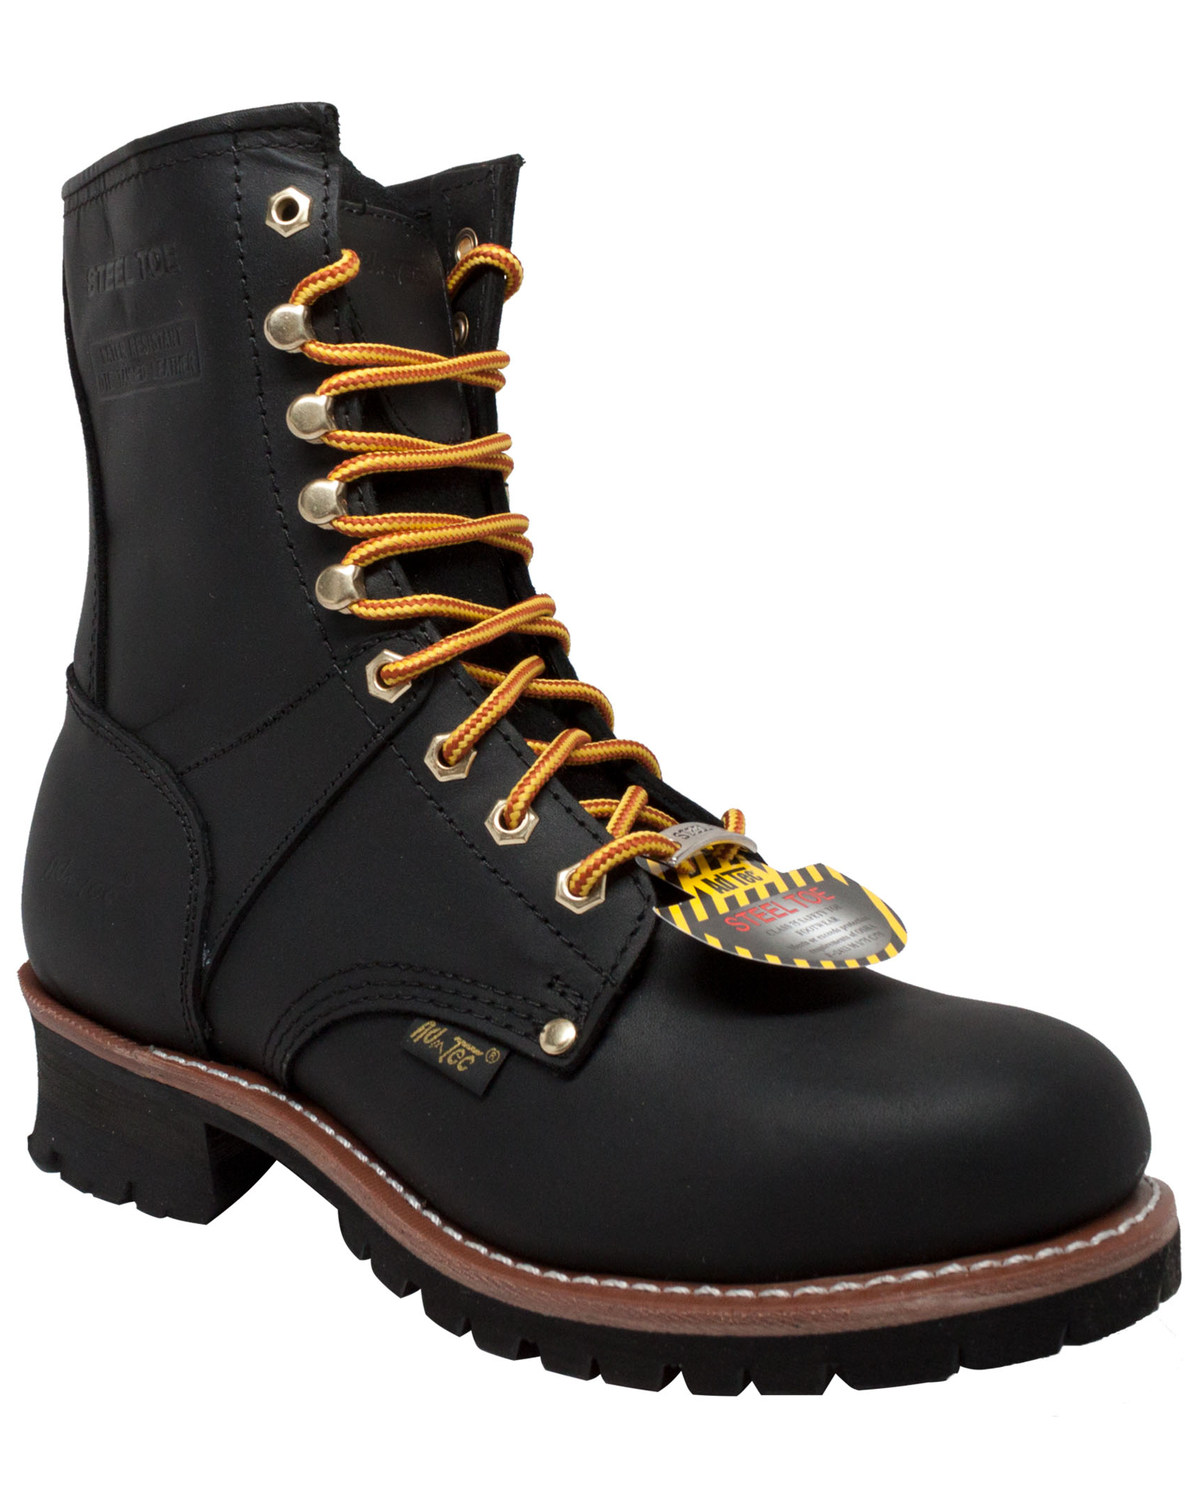 Ad Tec Men's 9" Waterproof Logger Work Boots - Steel Toe, Wide Sizes